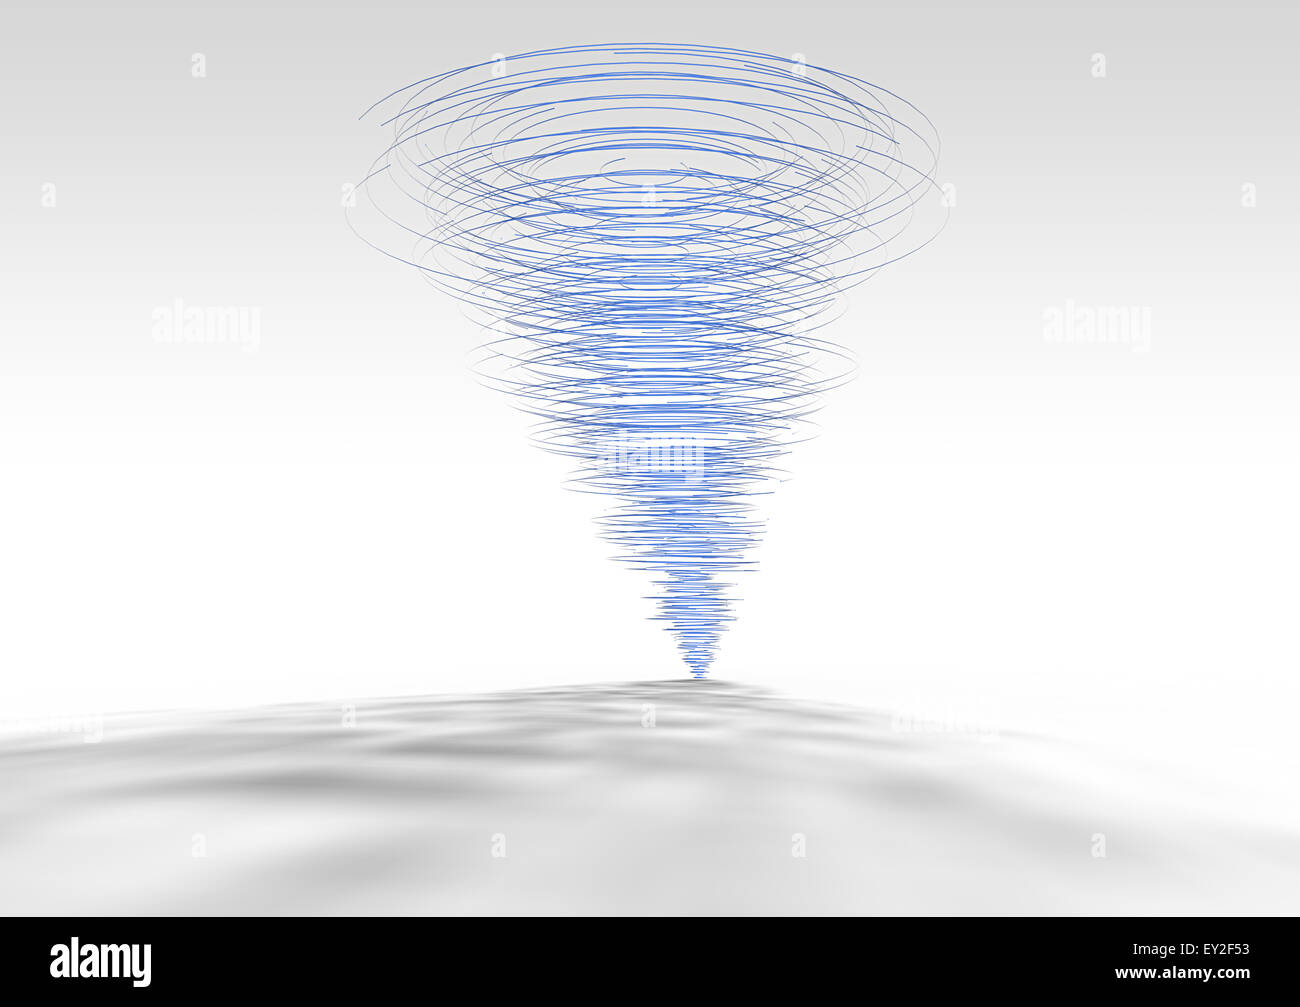 Tornado illustration Stock Photo